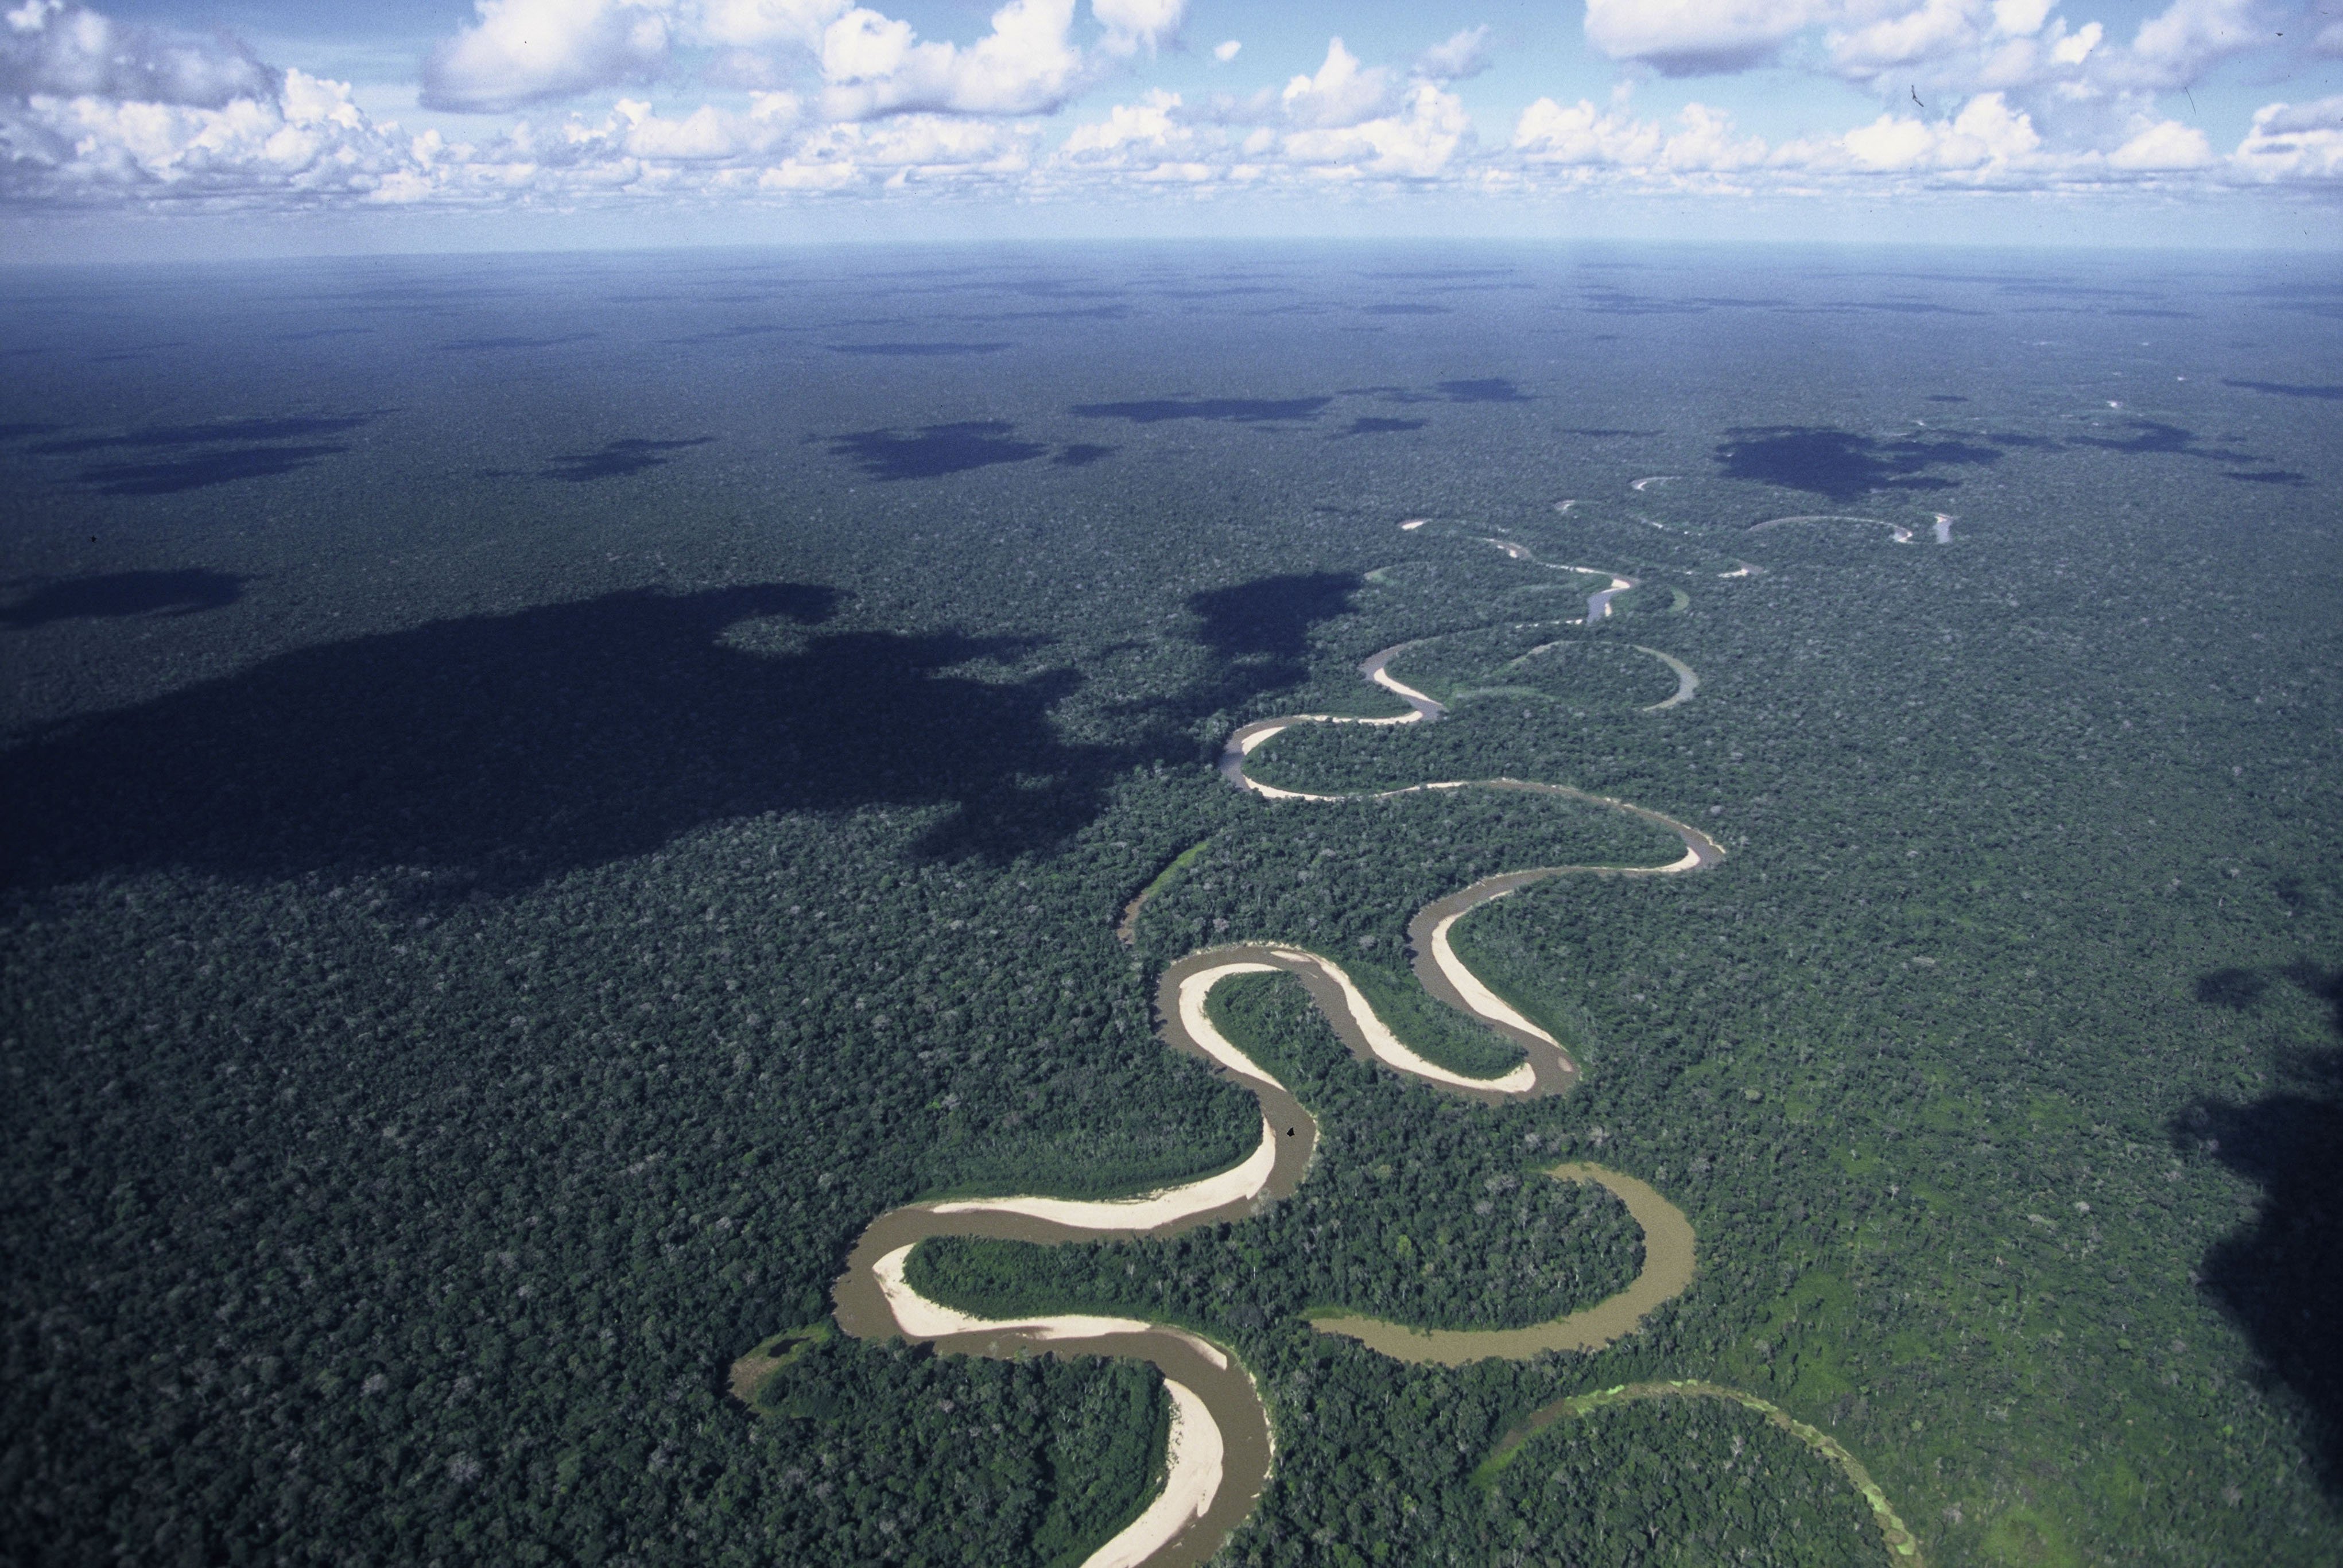 Реки на планете земля. Амазонка Укаяли Мараньон. Амазонка река Укаяли. Укаяли Исток. Бразилия Амазонская низменность.